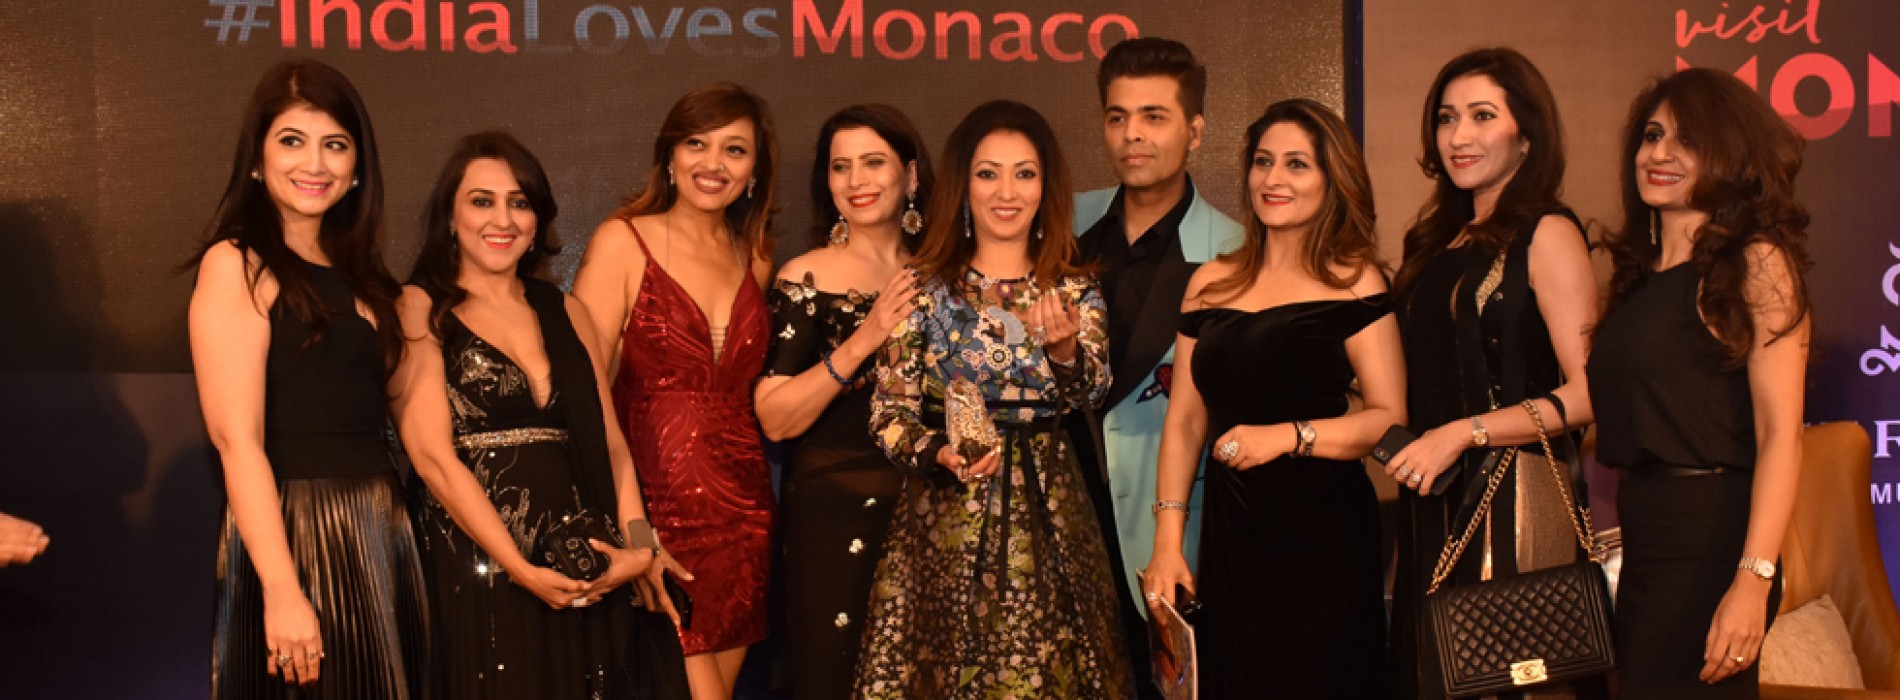 Visit Monaco celebrates New Year with Karan Johar and Millionaireasia India